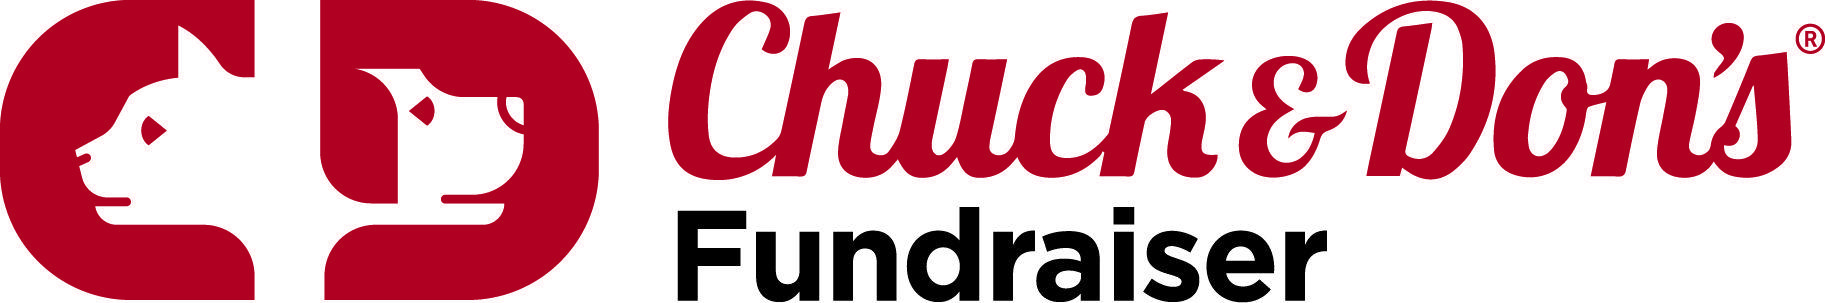 Chuck Logo - Raising Awareness | Chuck & Don's